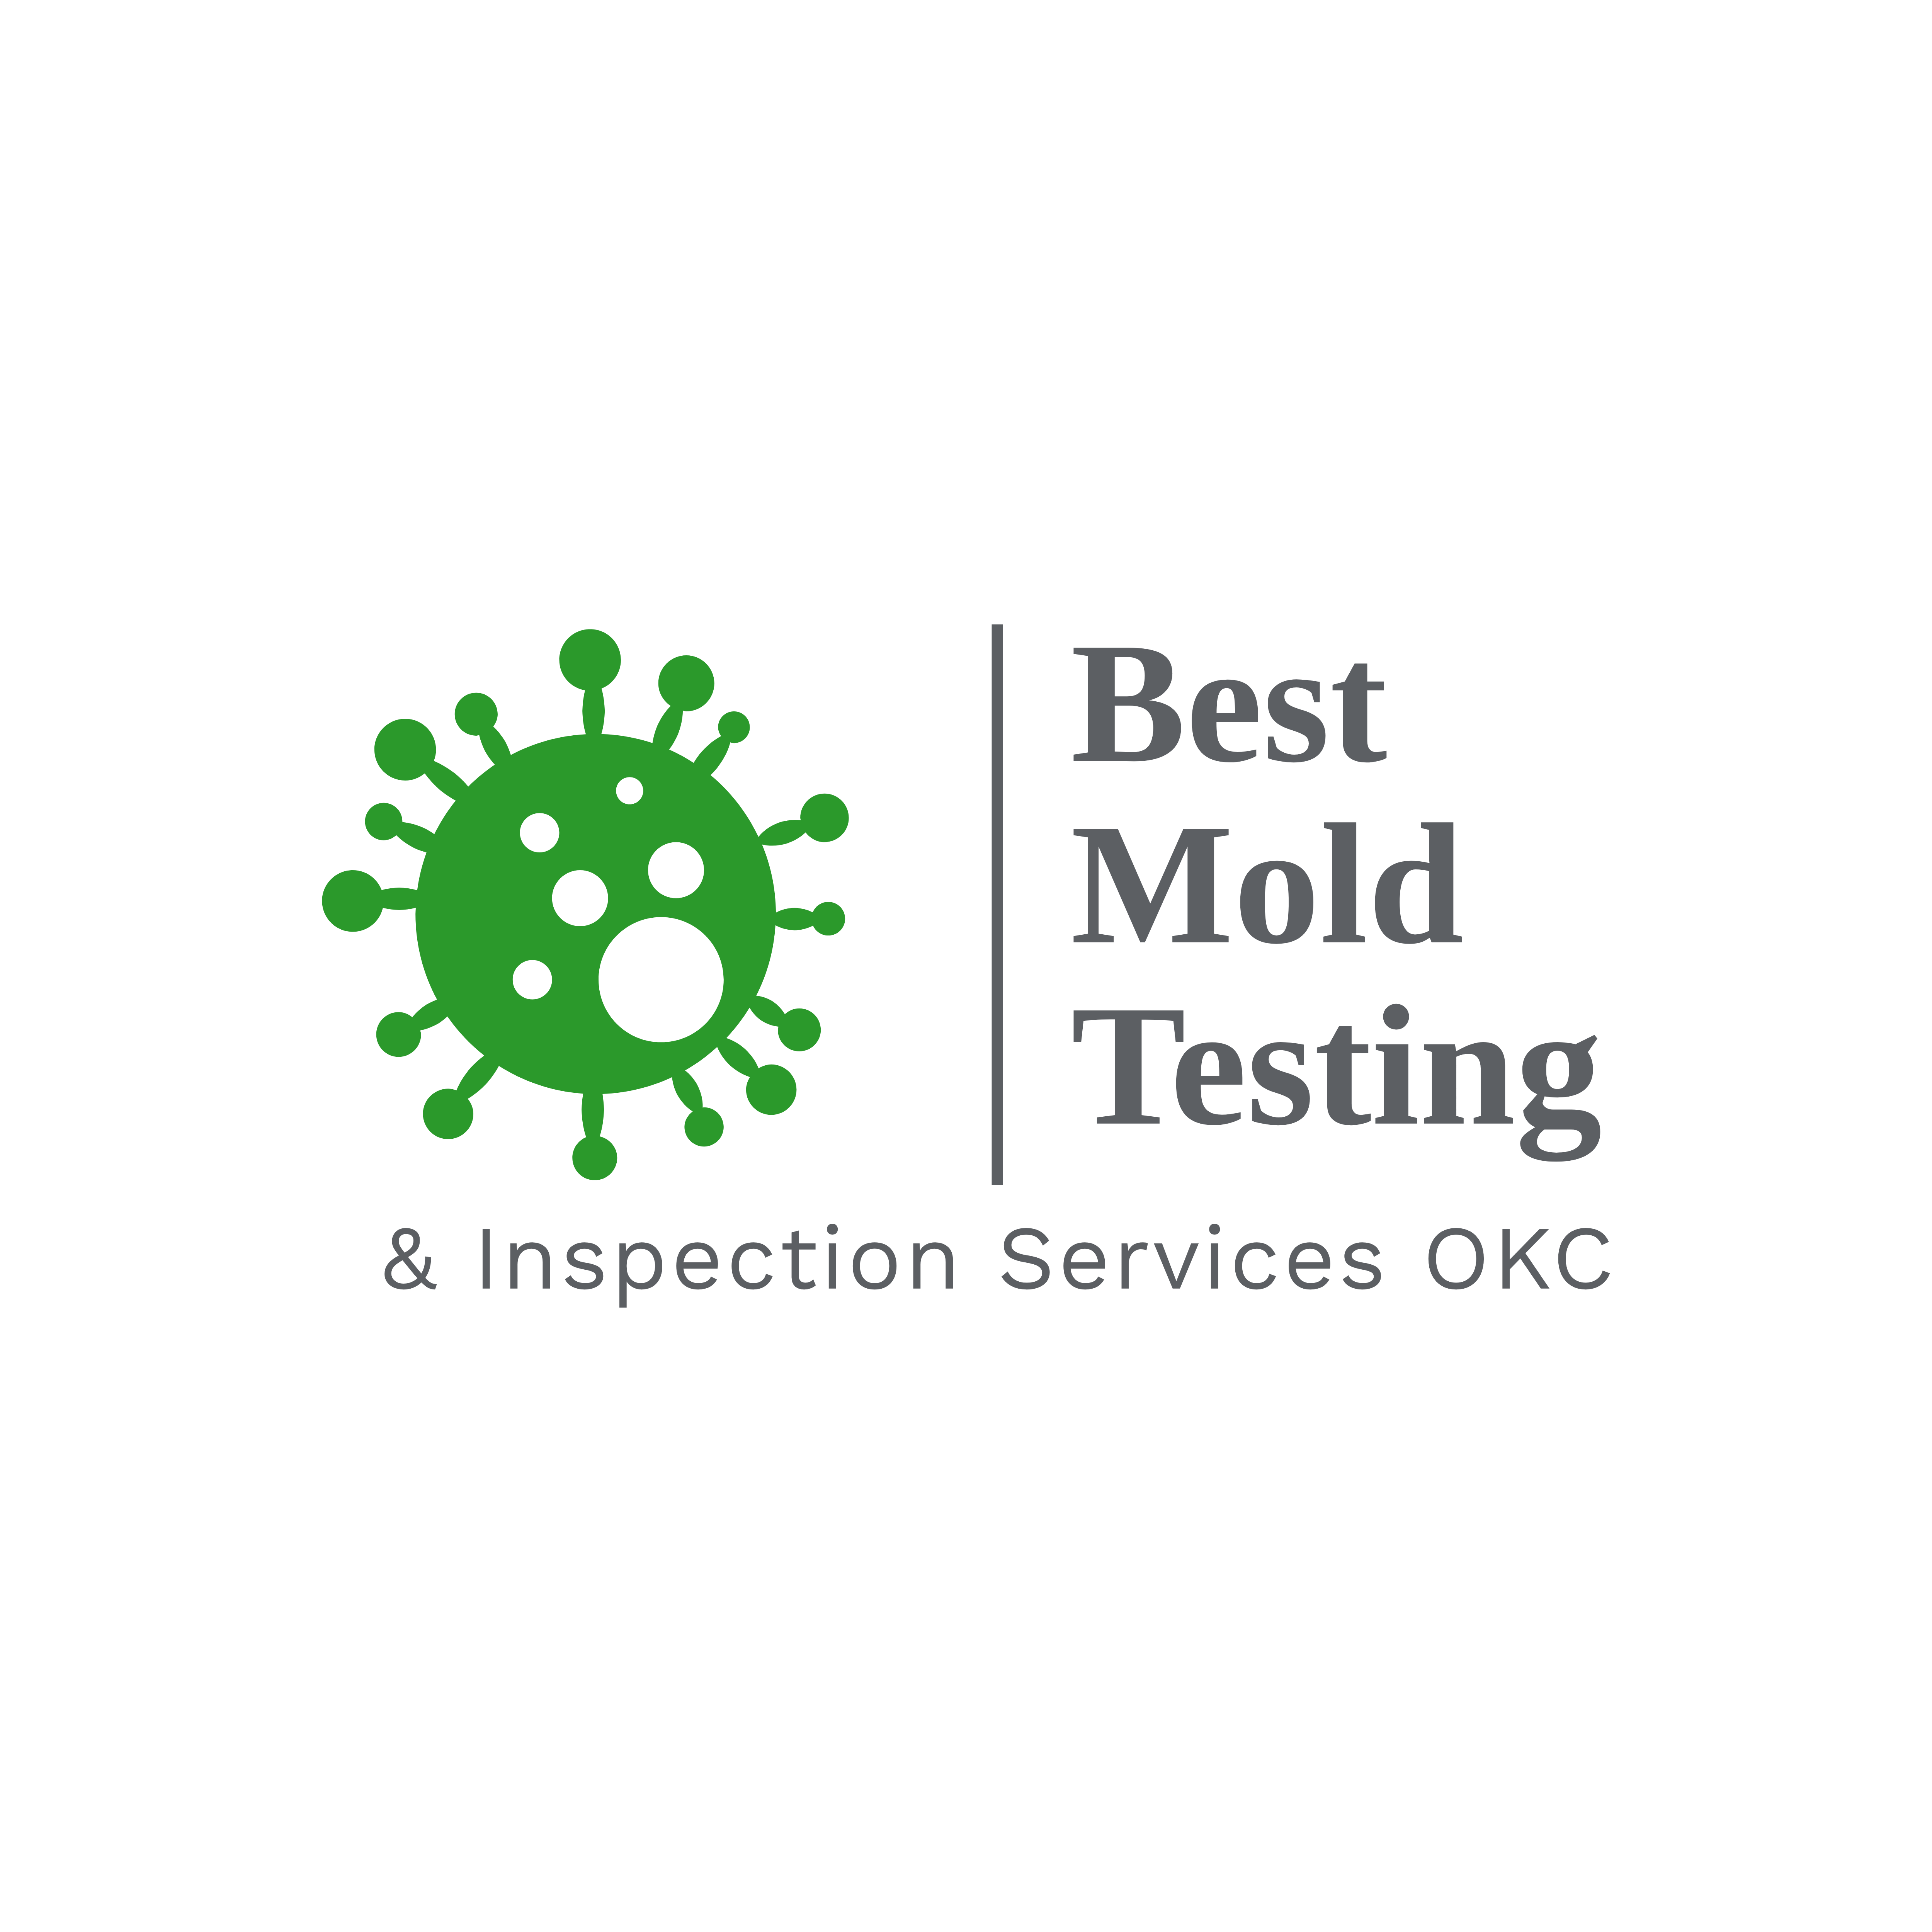 Best Mold Testing & Inspection Services OKC Logo